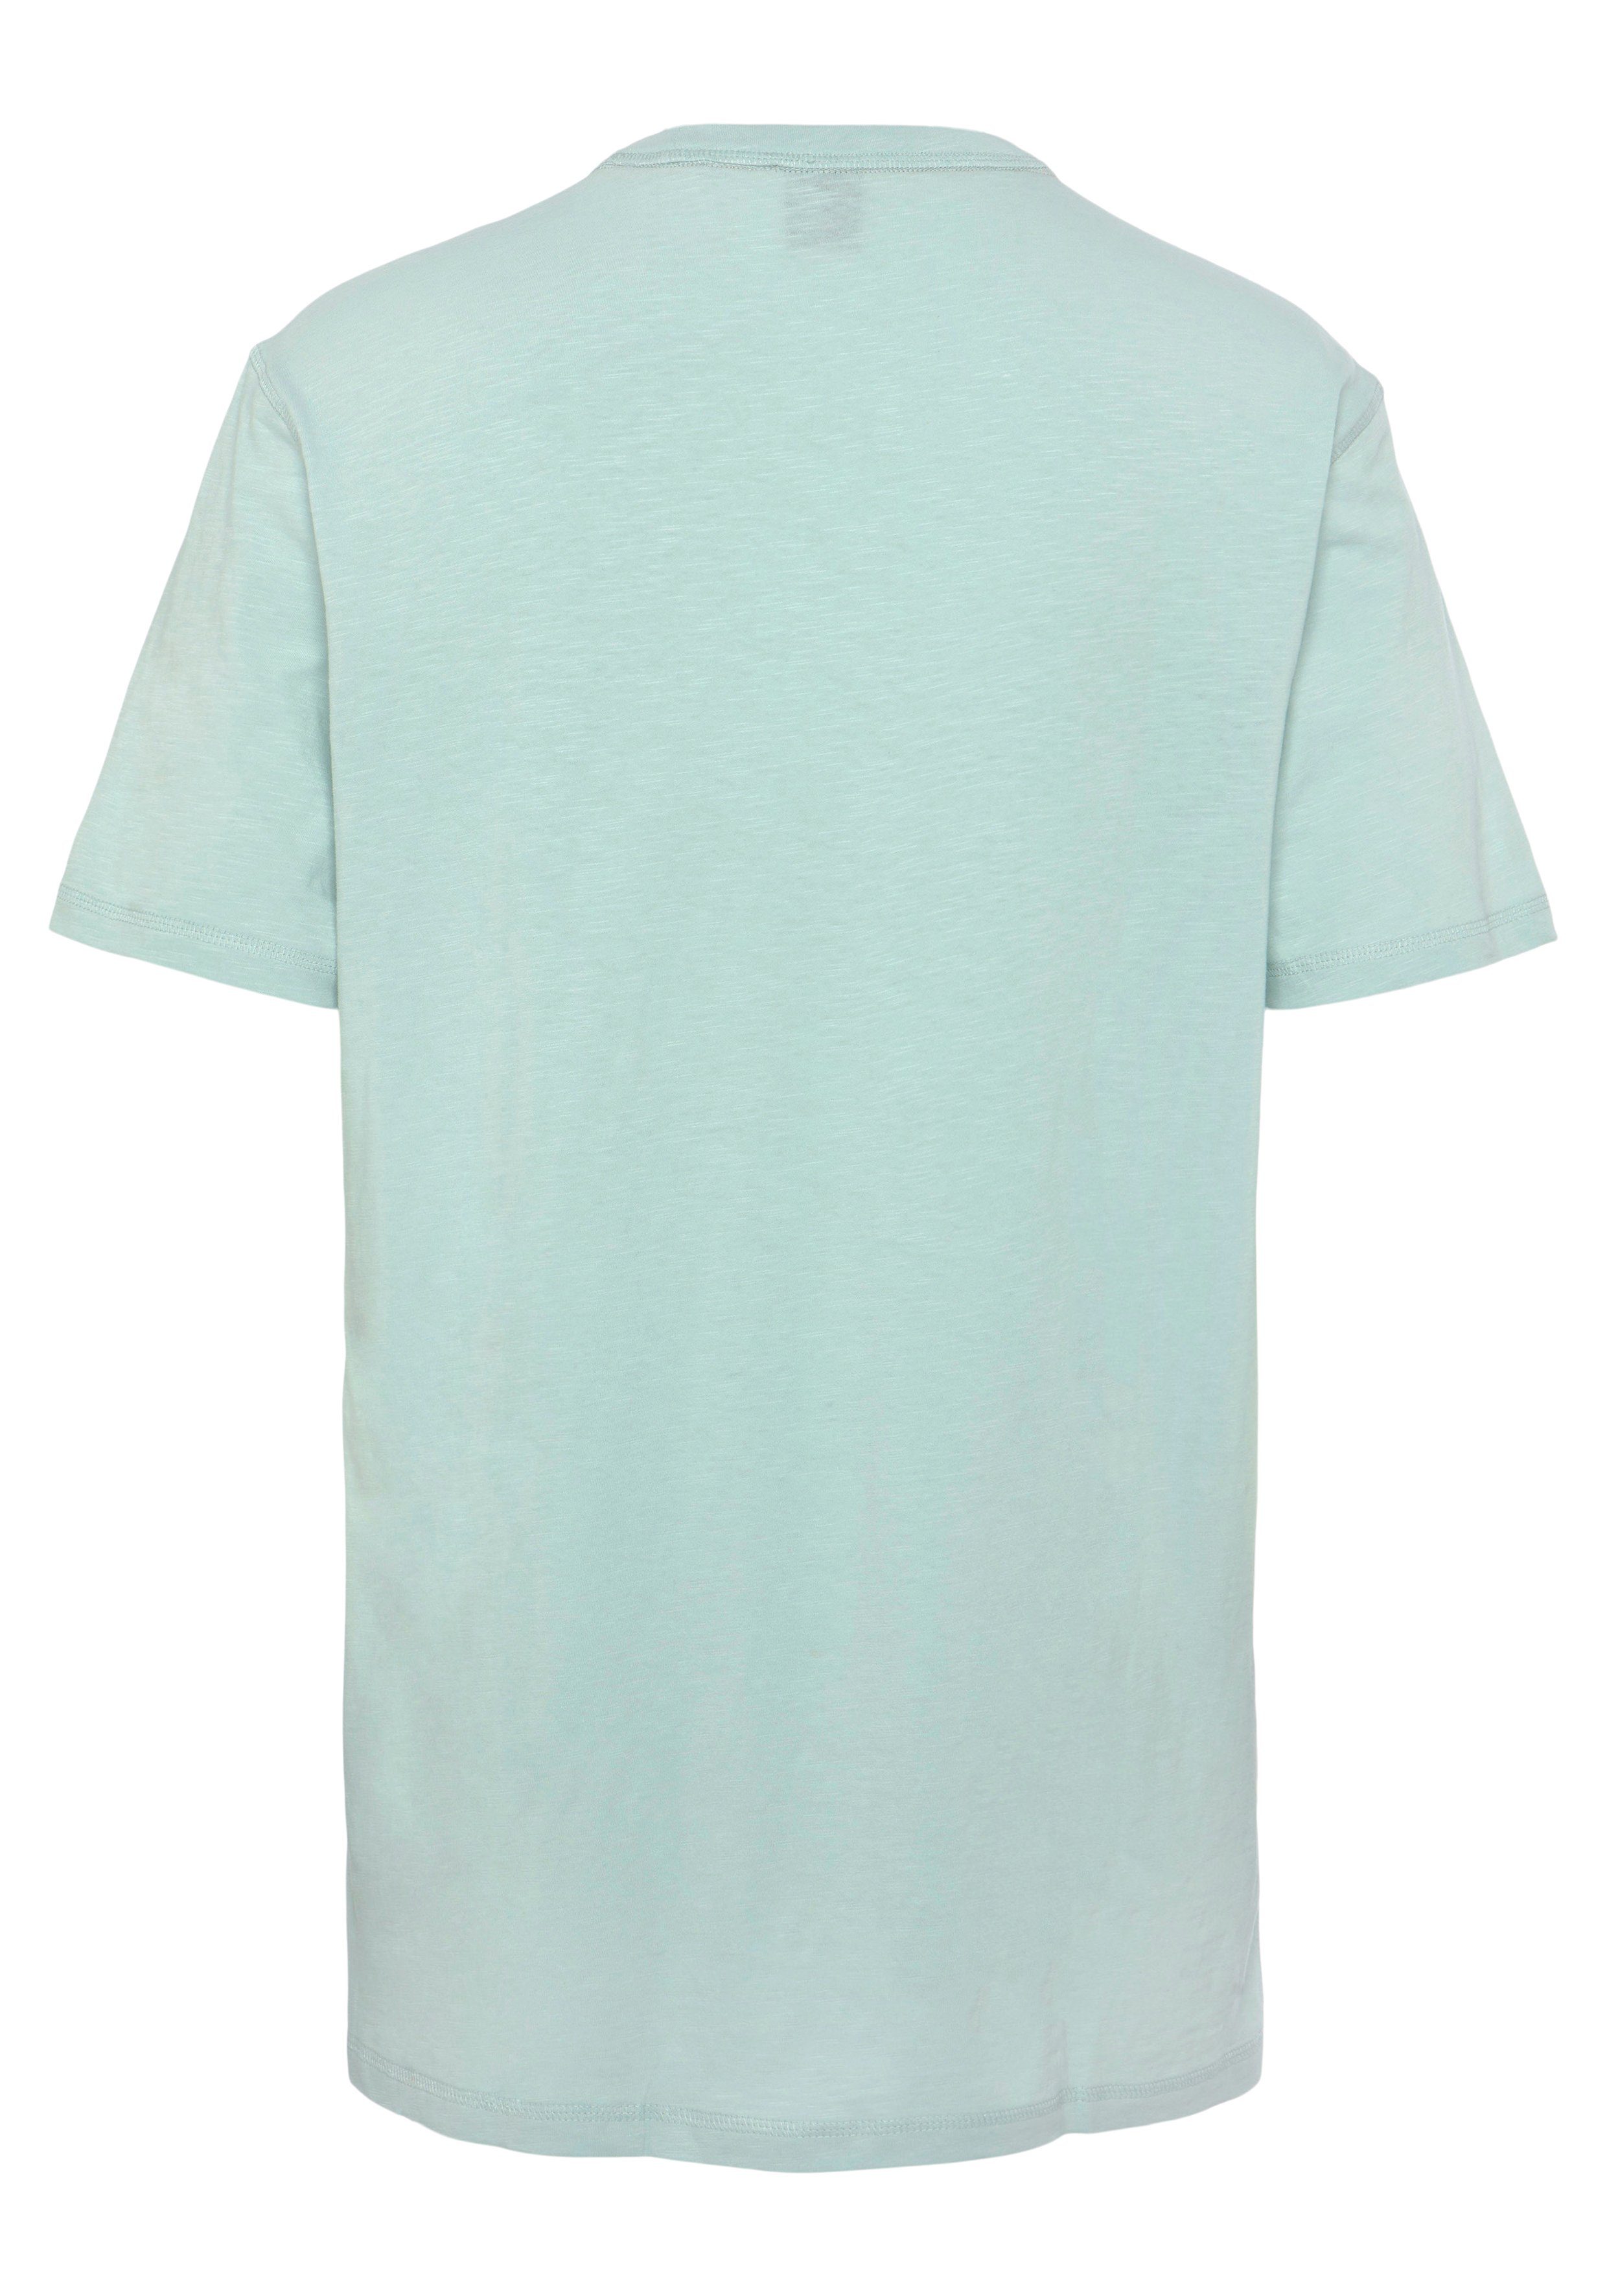 mit BOSS T-Shirt Rundhalsausschnitt 446 Turquoise/Aqua Tegood ORANGE